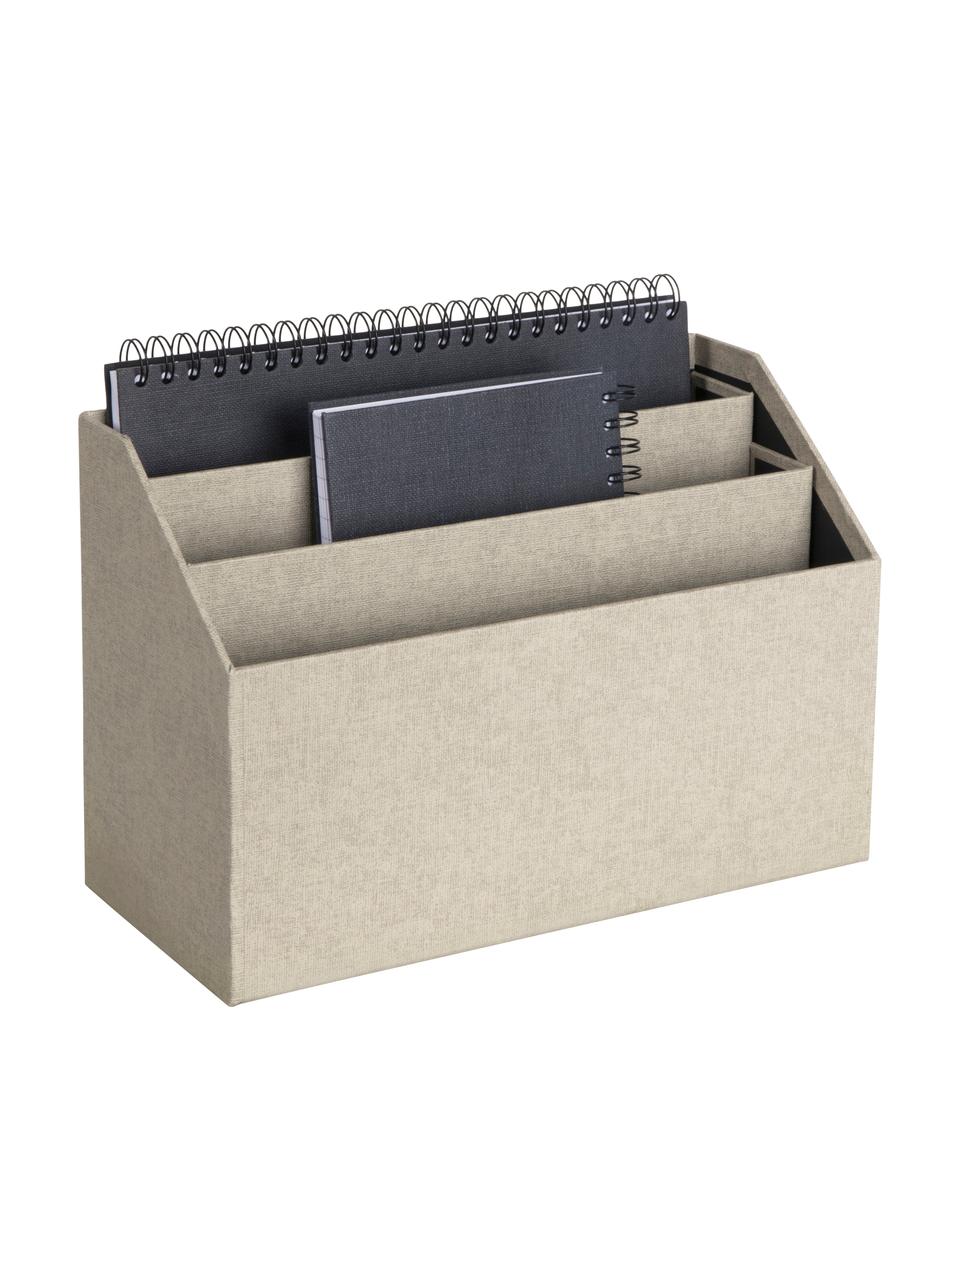 Büro-Organizer Hector, Canvas, fester Karton
(100 % recyceltes Papier), Beige, B 33 x H 23 cm